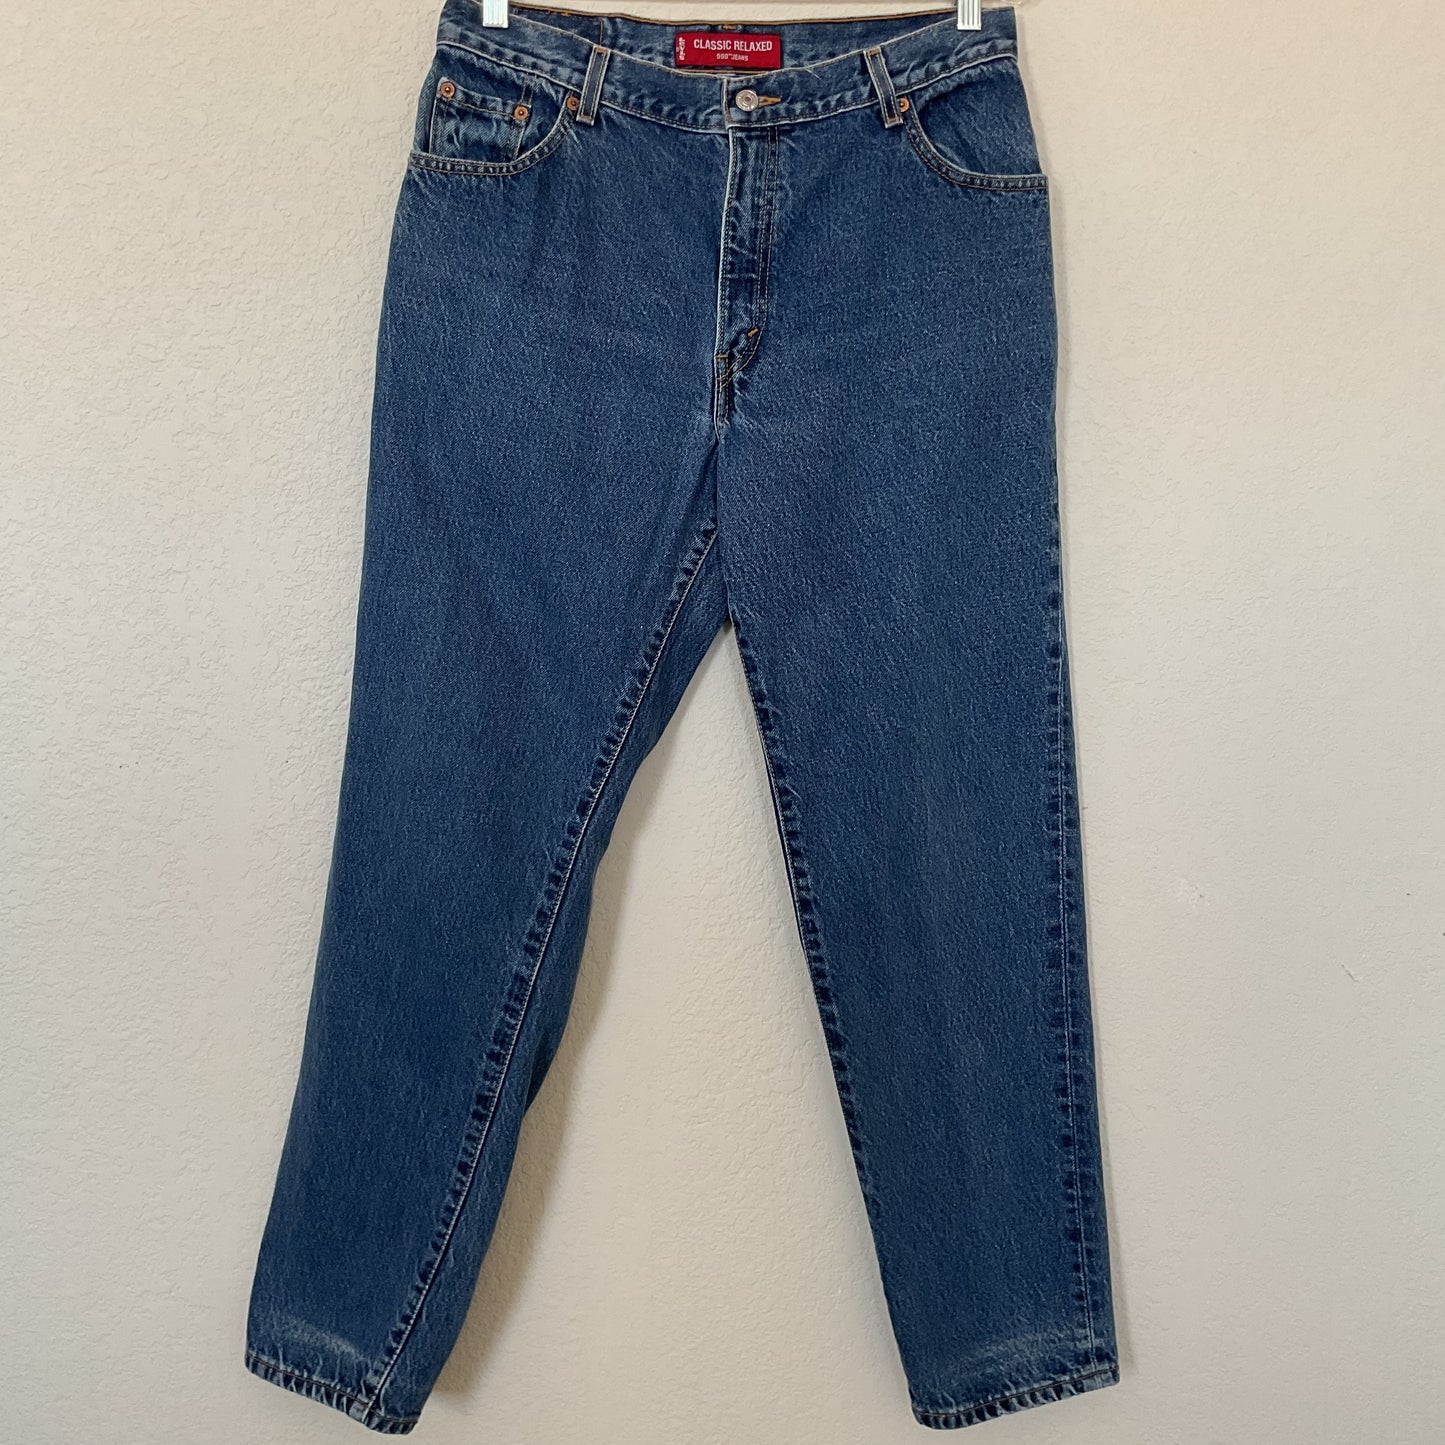 Vintage Levi’s Classic Relaxed 550 Women’s Plus Jeans Size 14M.